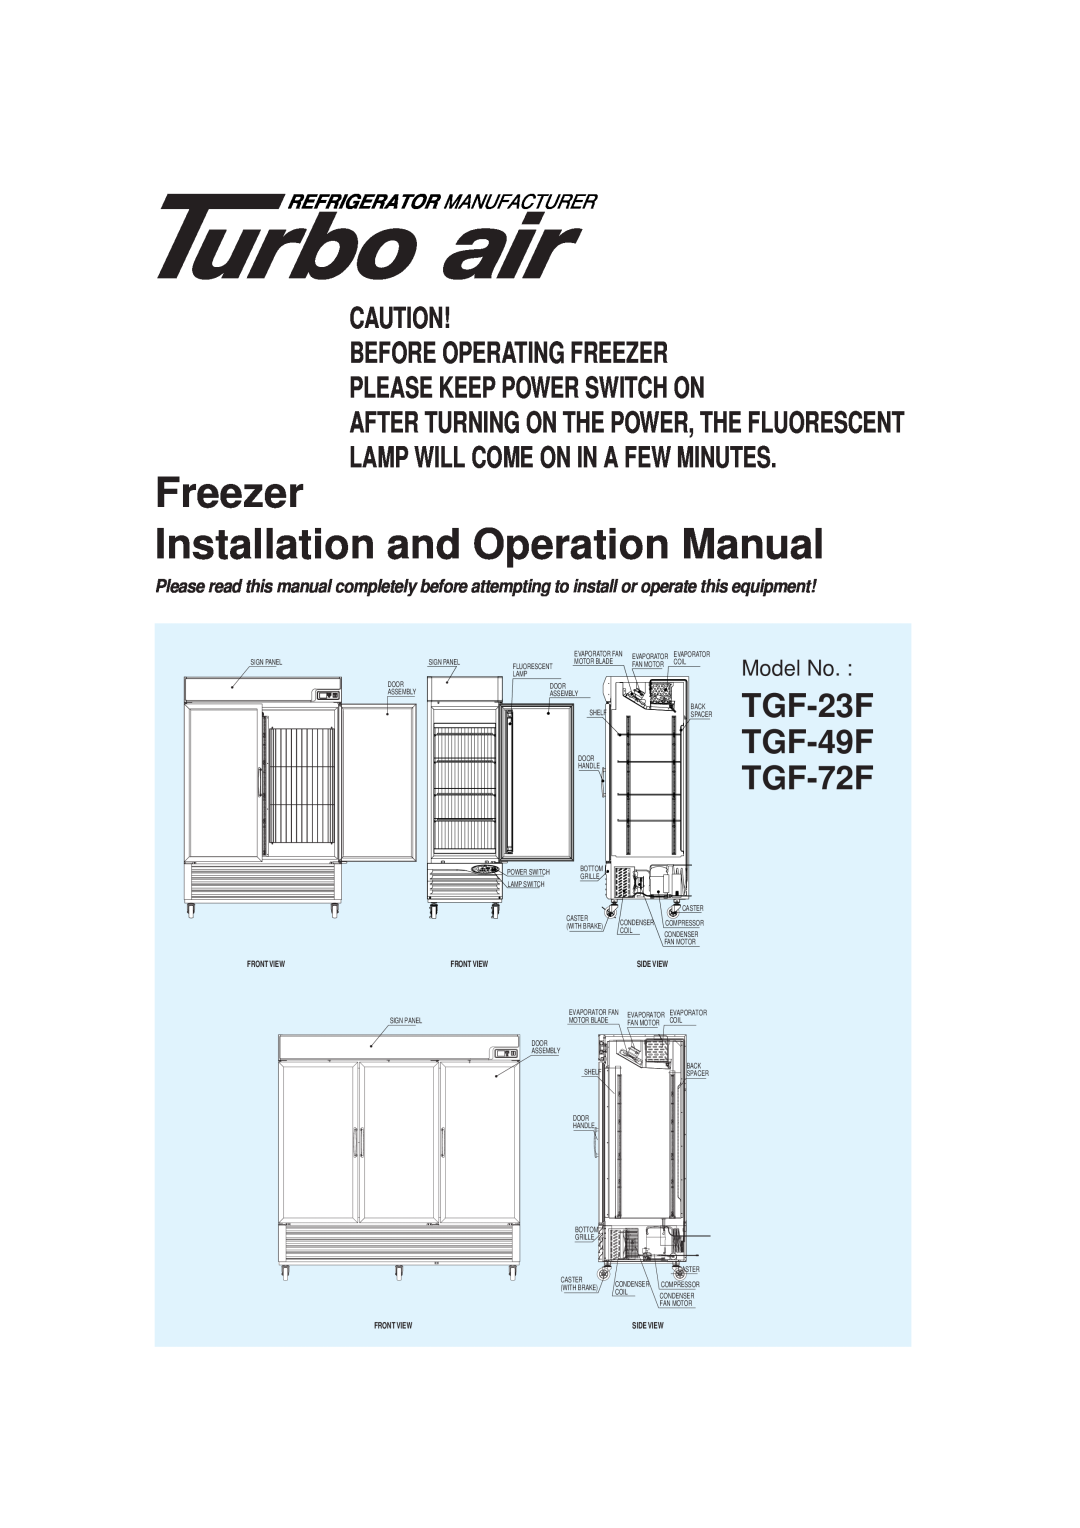 Turbo Air TGM-5R manual Headquarter 1250 Victoria street CARSON, CA, Canada Toll Free 800-627-0032 TEL FAX, 0210001 